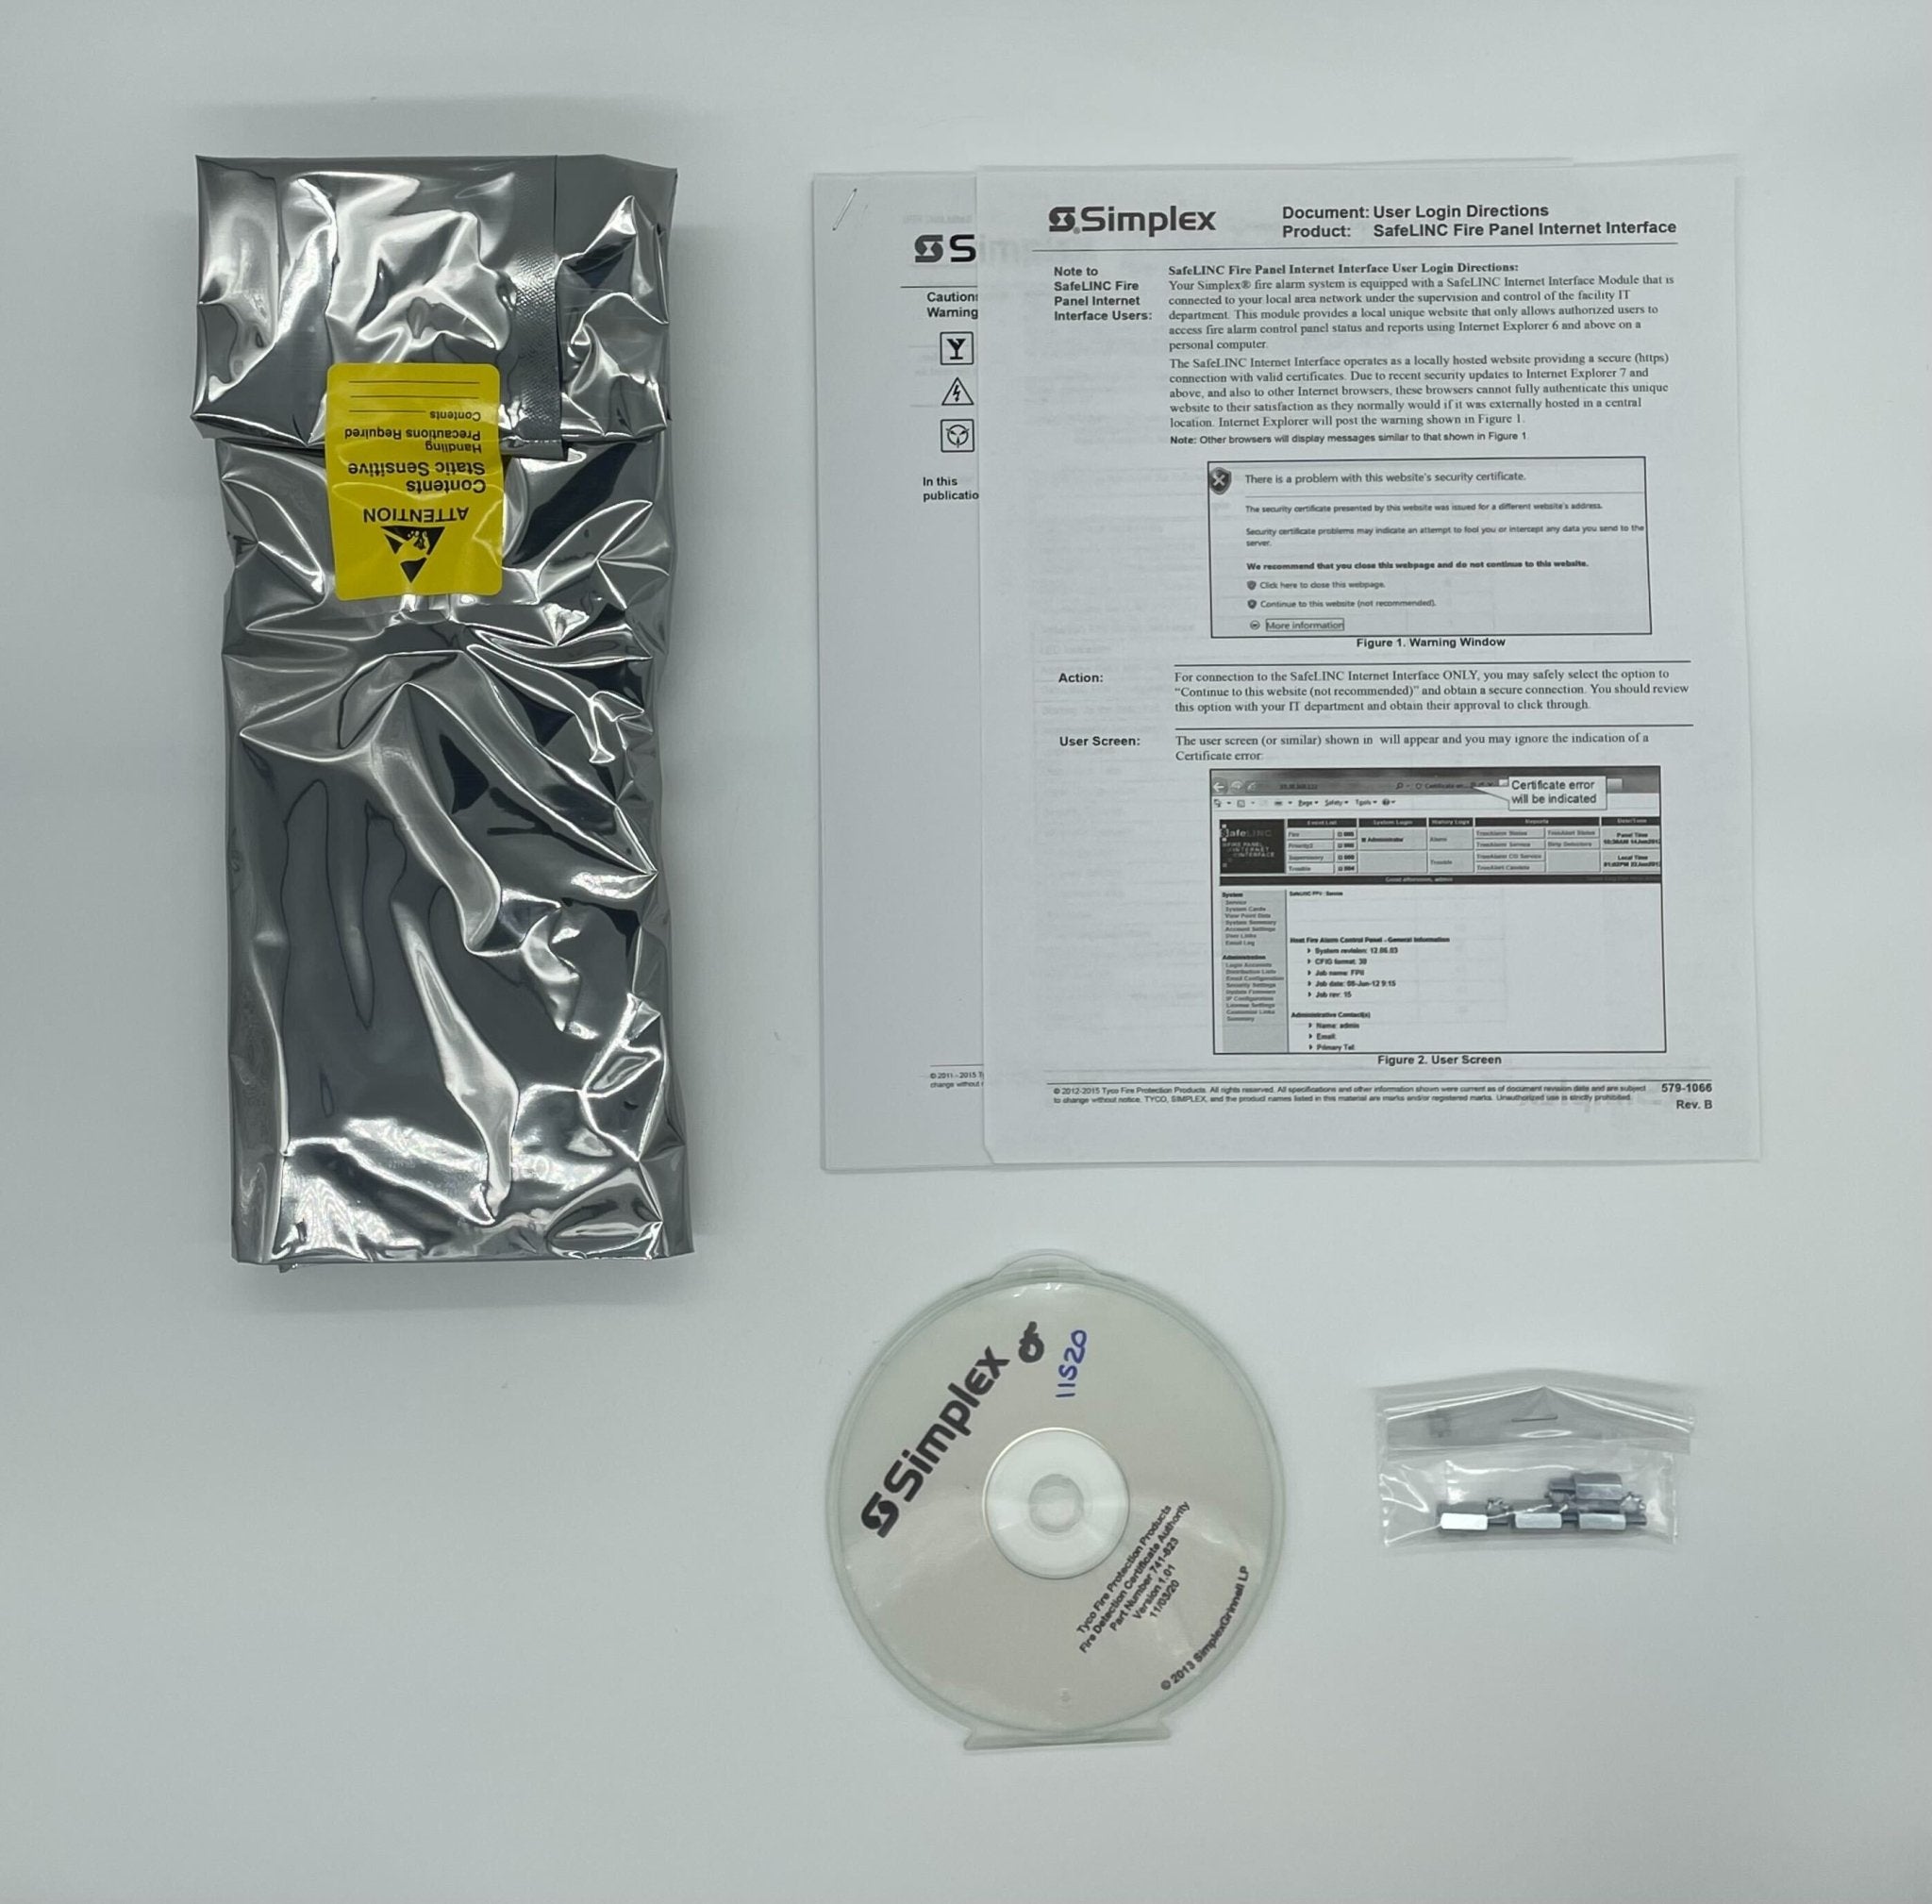 Simplex 4100-6079 New Safelinc Interface - The Fire Alarm Supplier